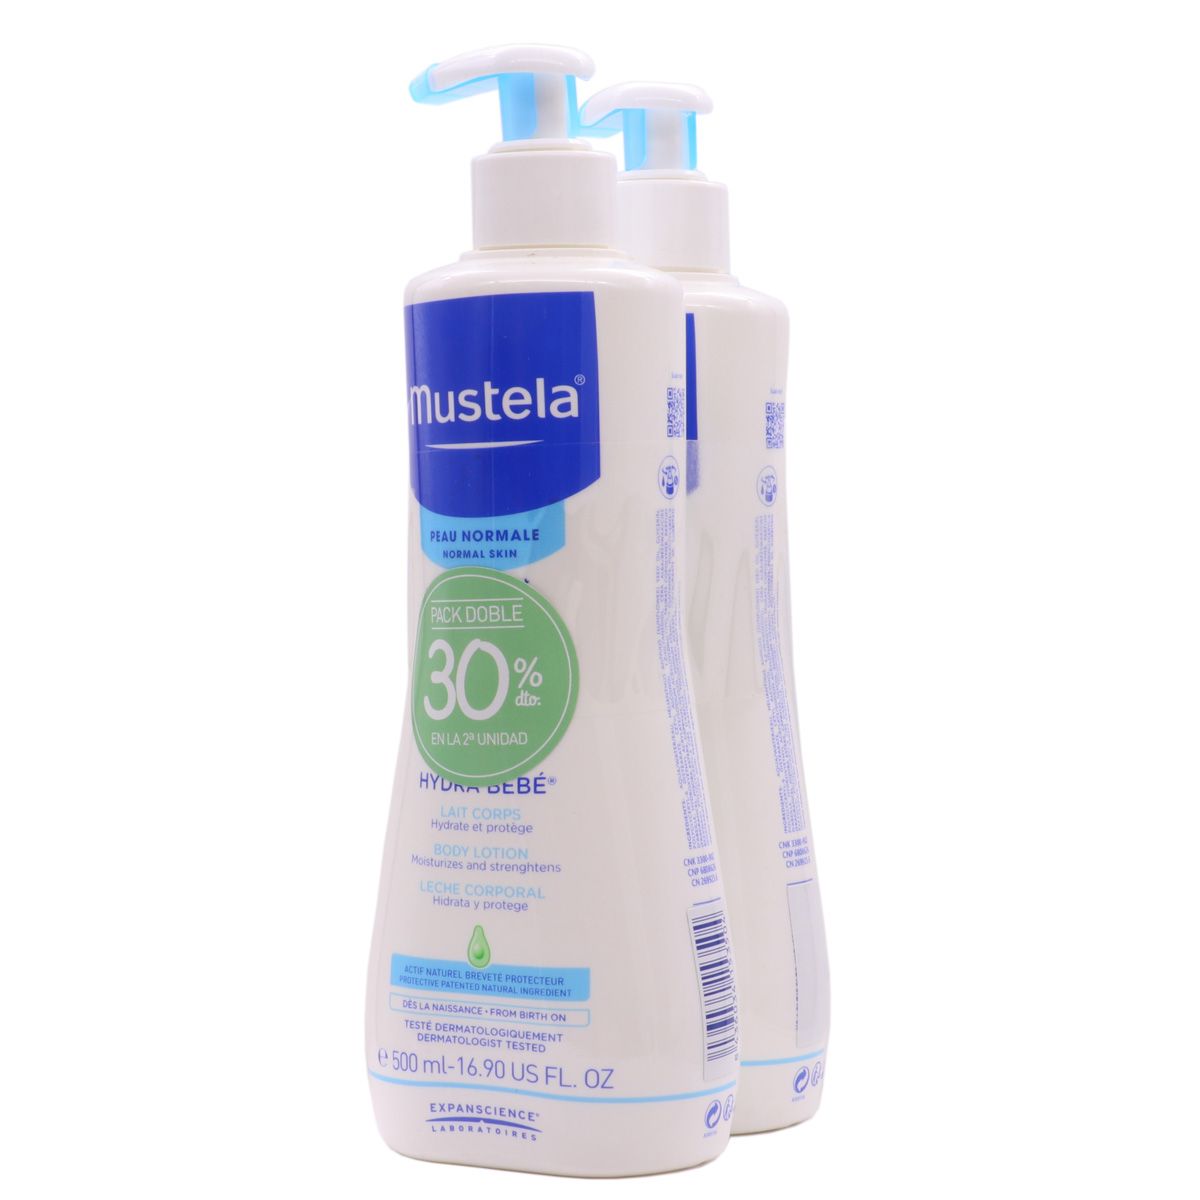 Mustela Pack Hydrabebé leche corporal + Hydrabebé crema facial